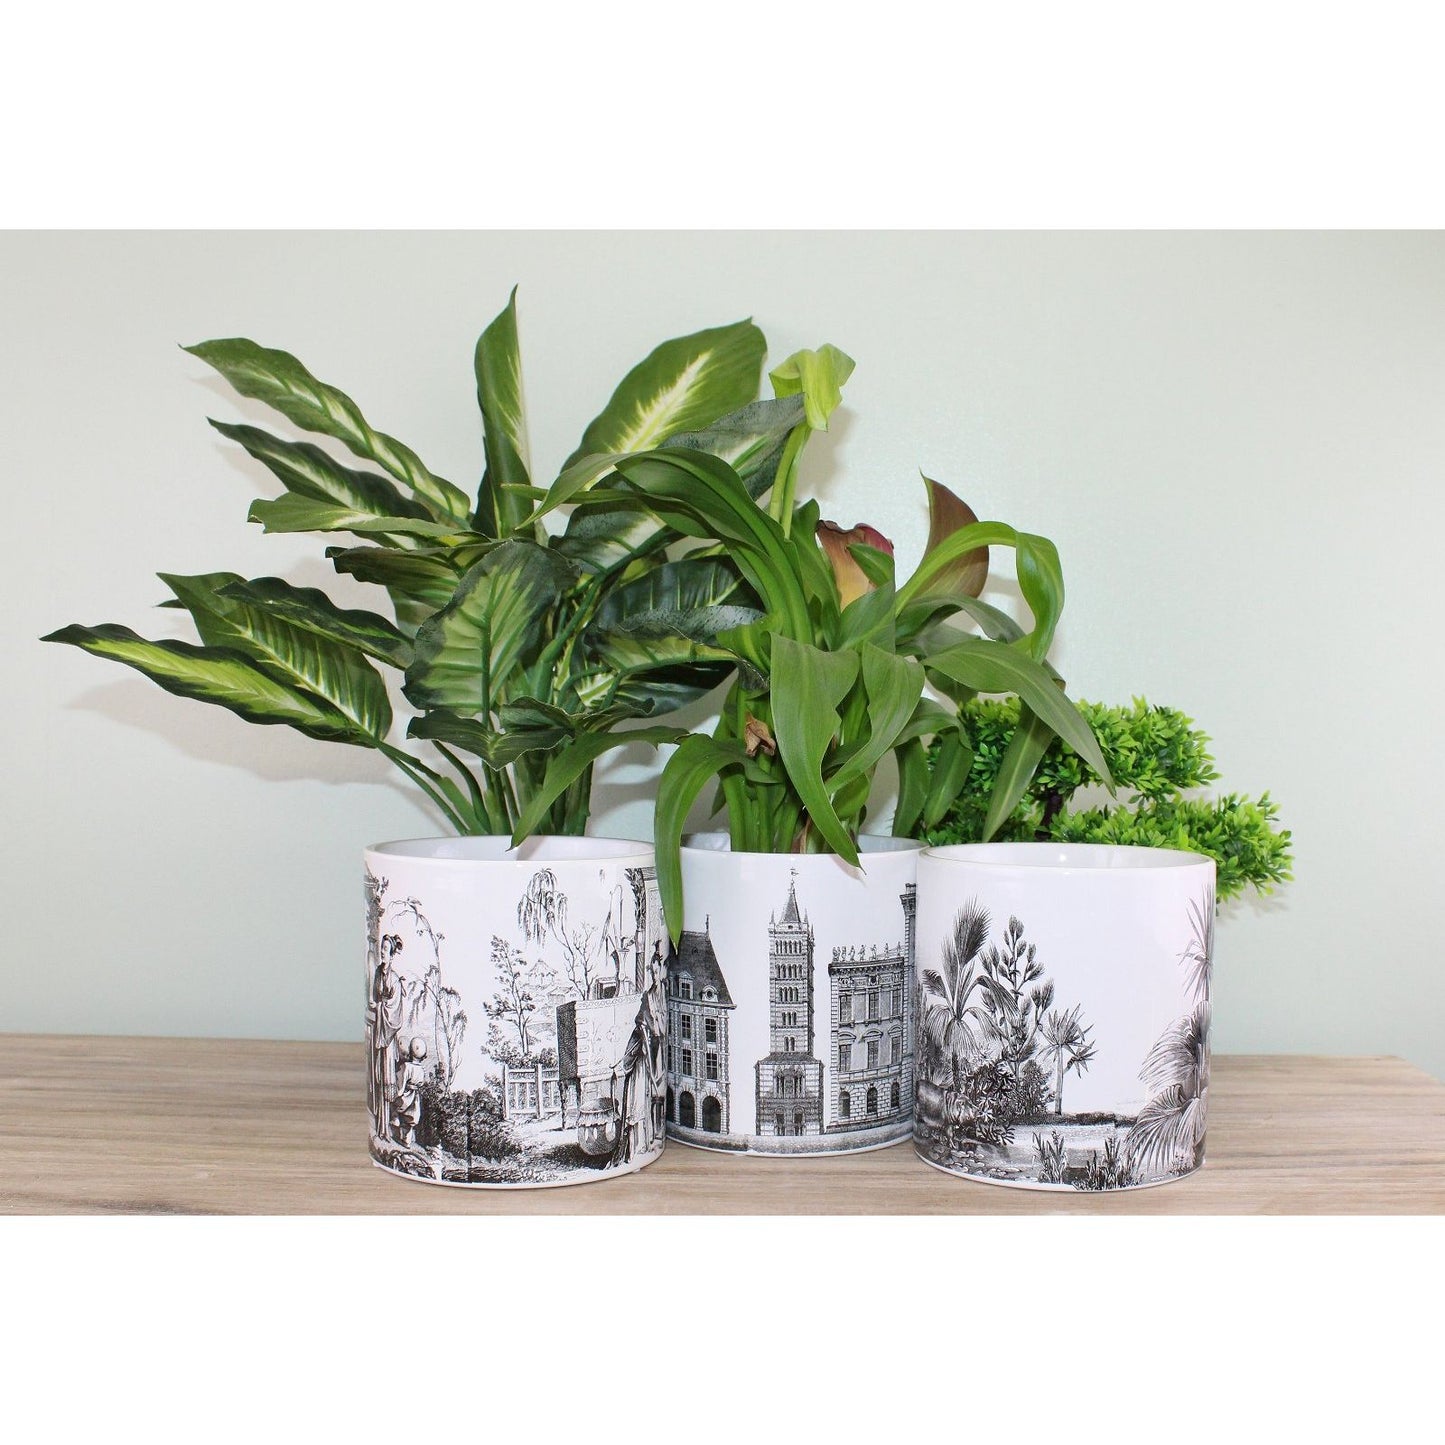 Set of 3 Monochrome Ceramic Small Planters - Ashton and Finch